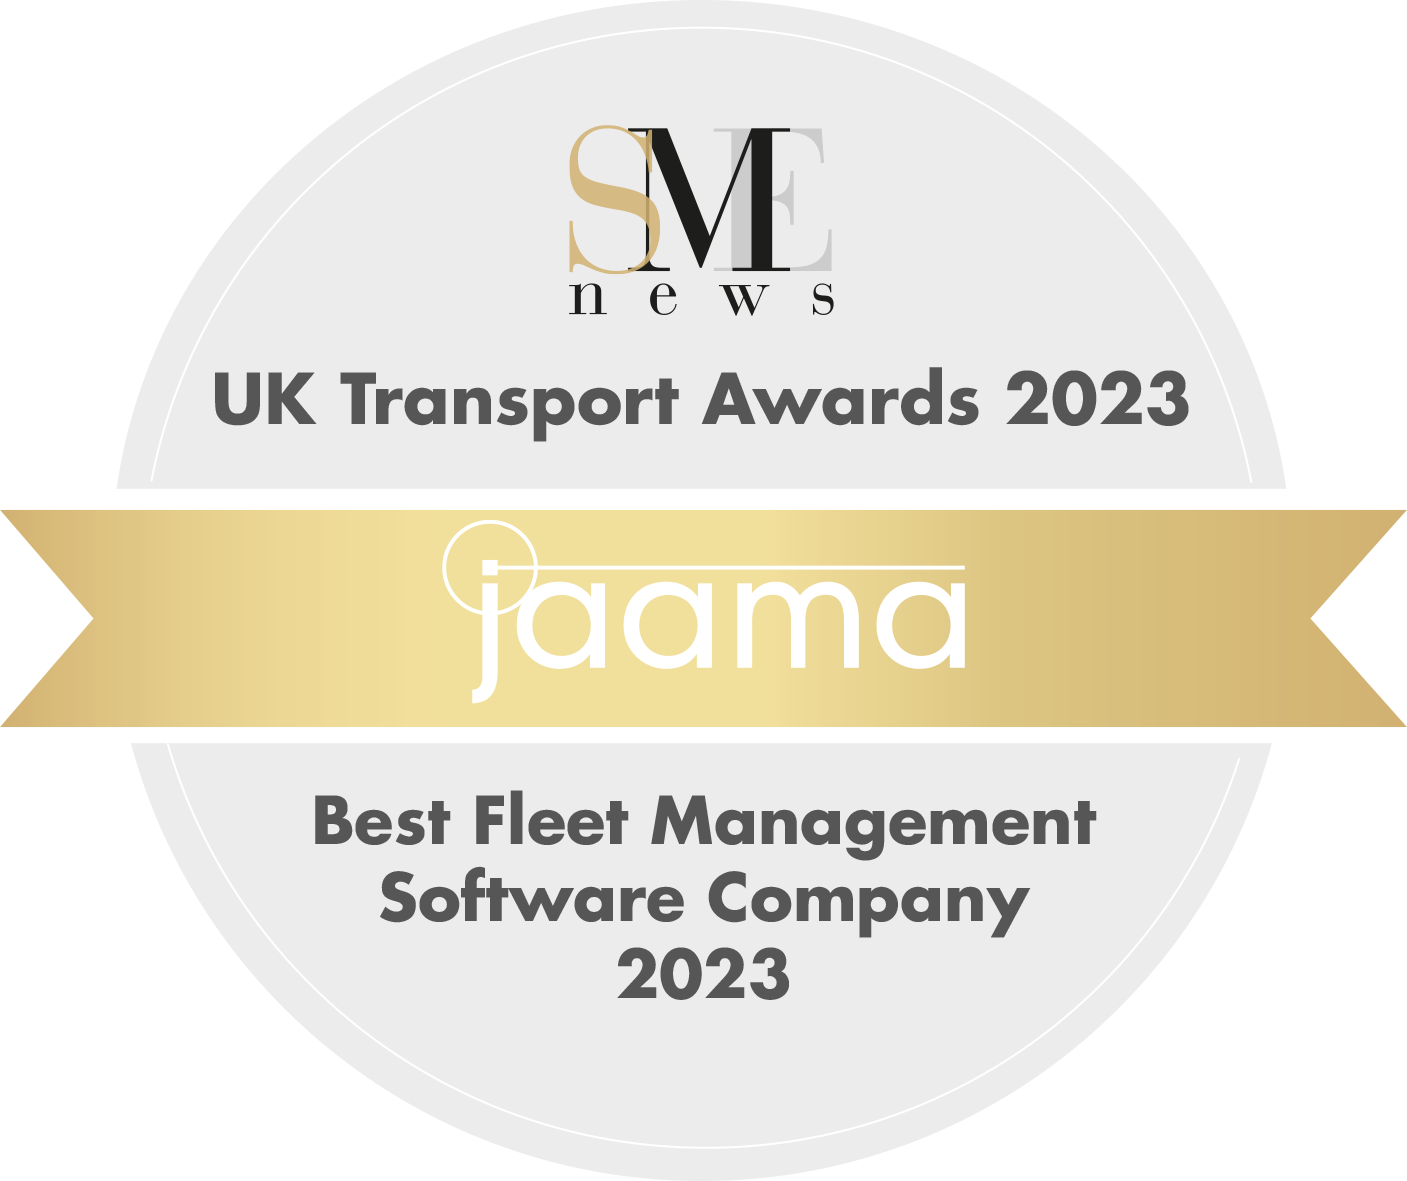 UK Transport Awards Best Fleet Management Software Company 2023